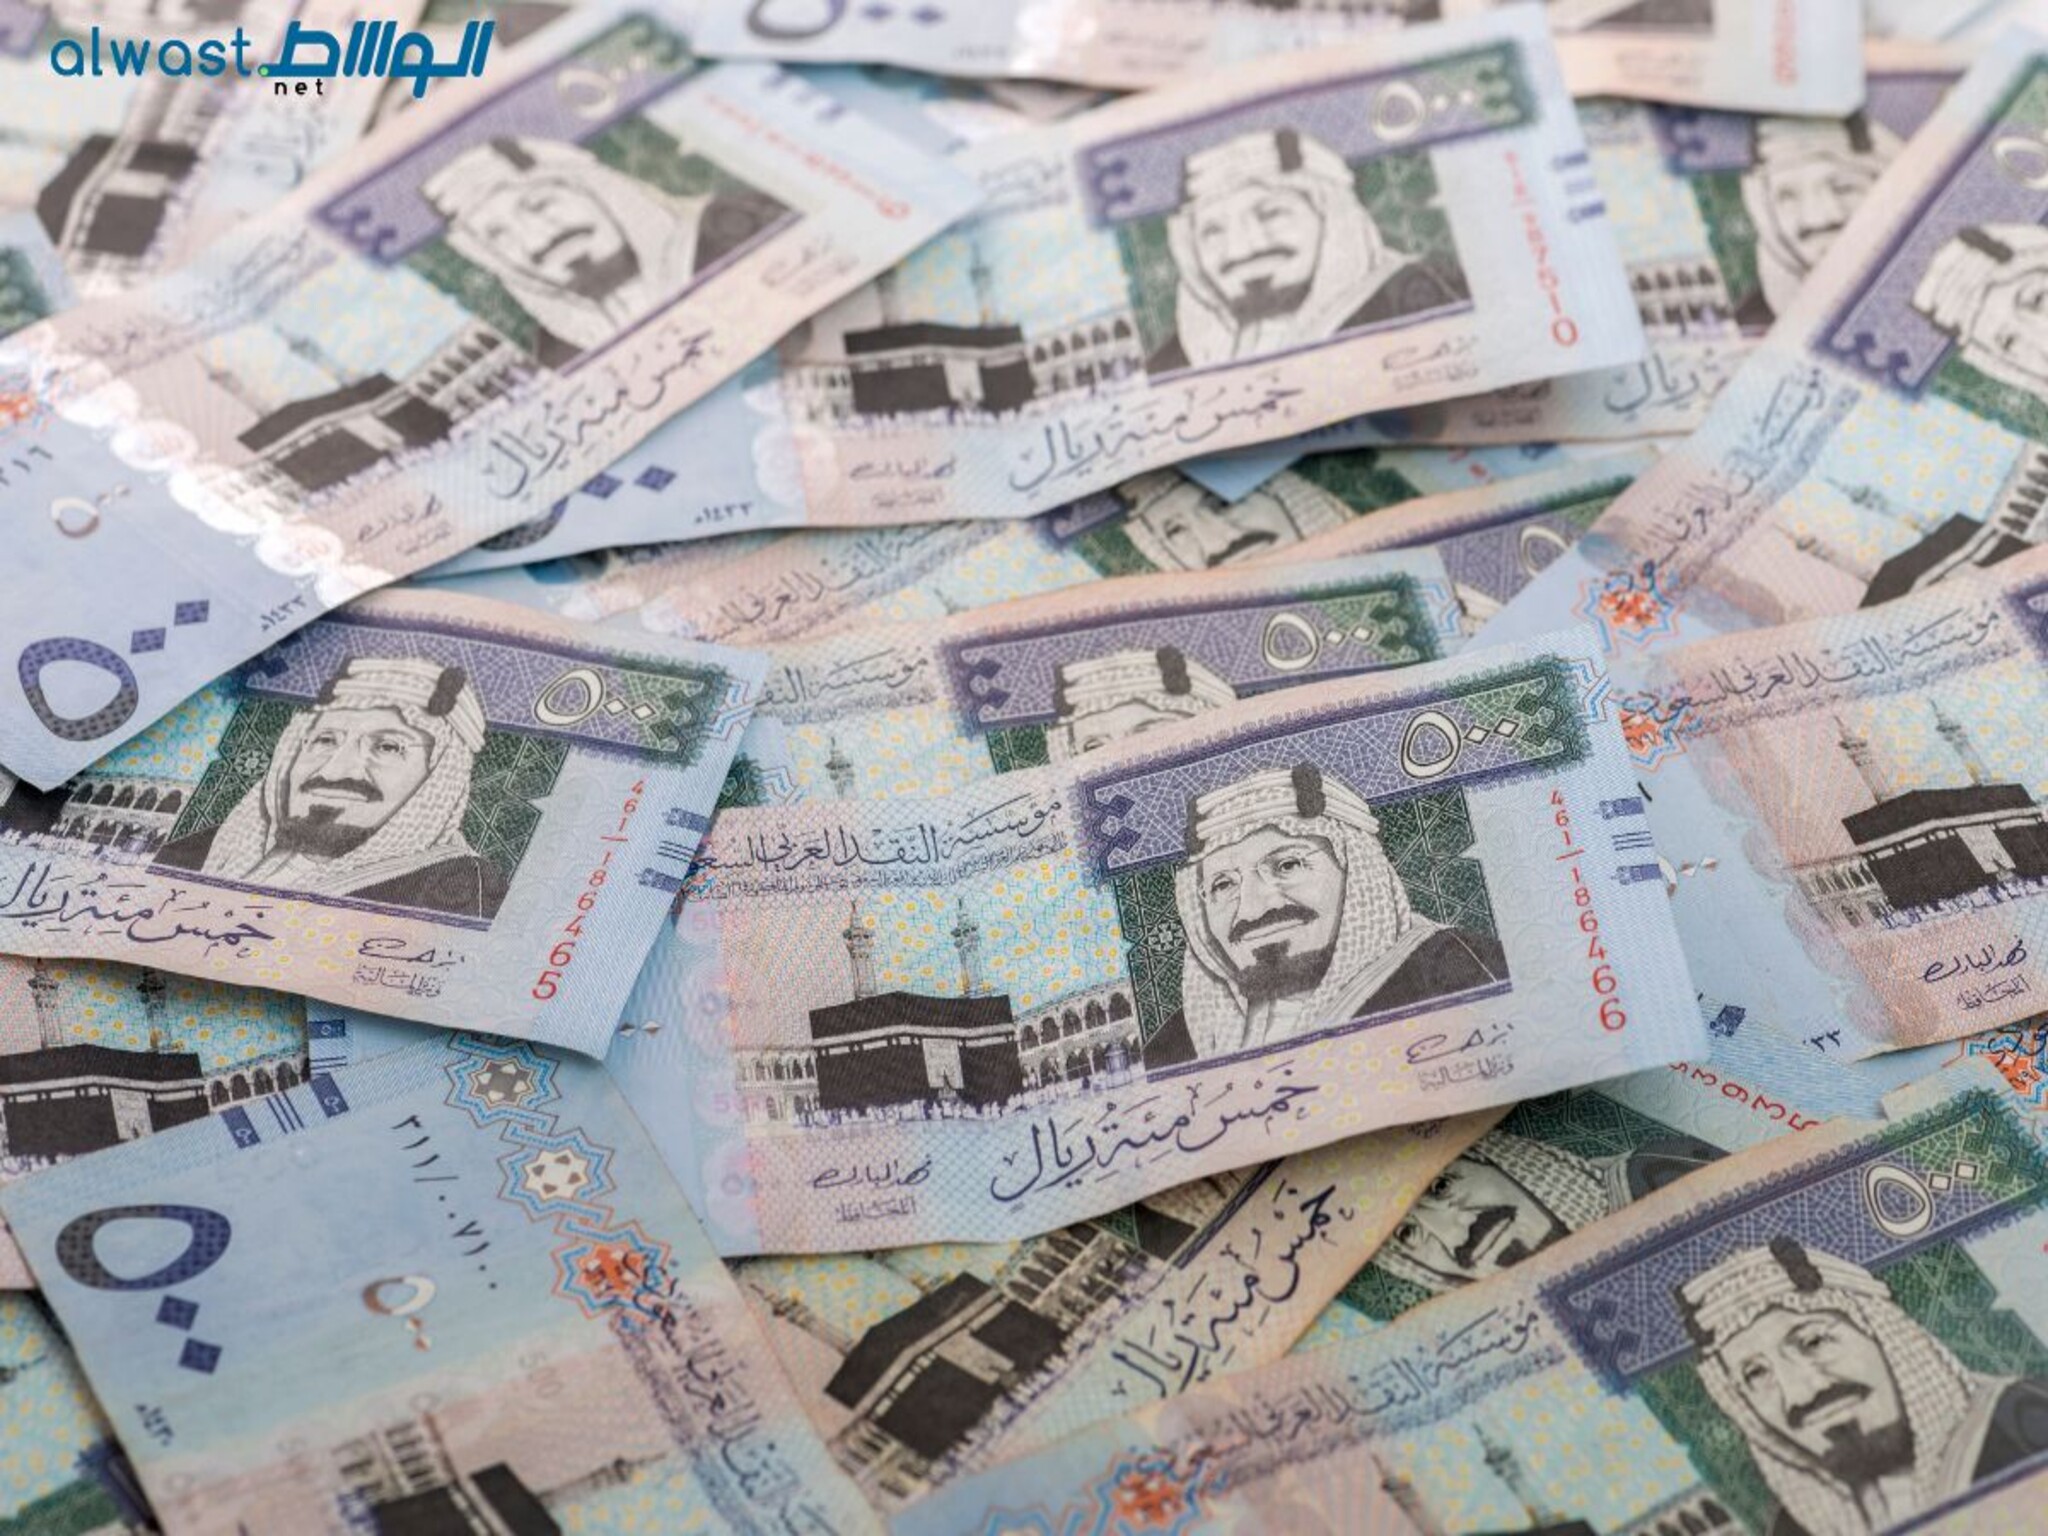  Saudi Arabia Economy Soars, Surpassing $1.1 Trillion in GDP